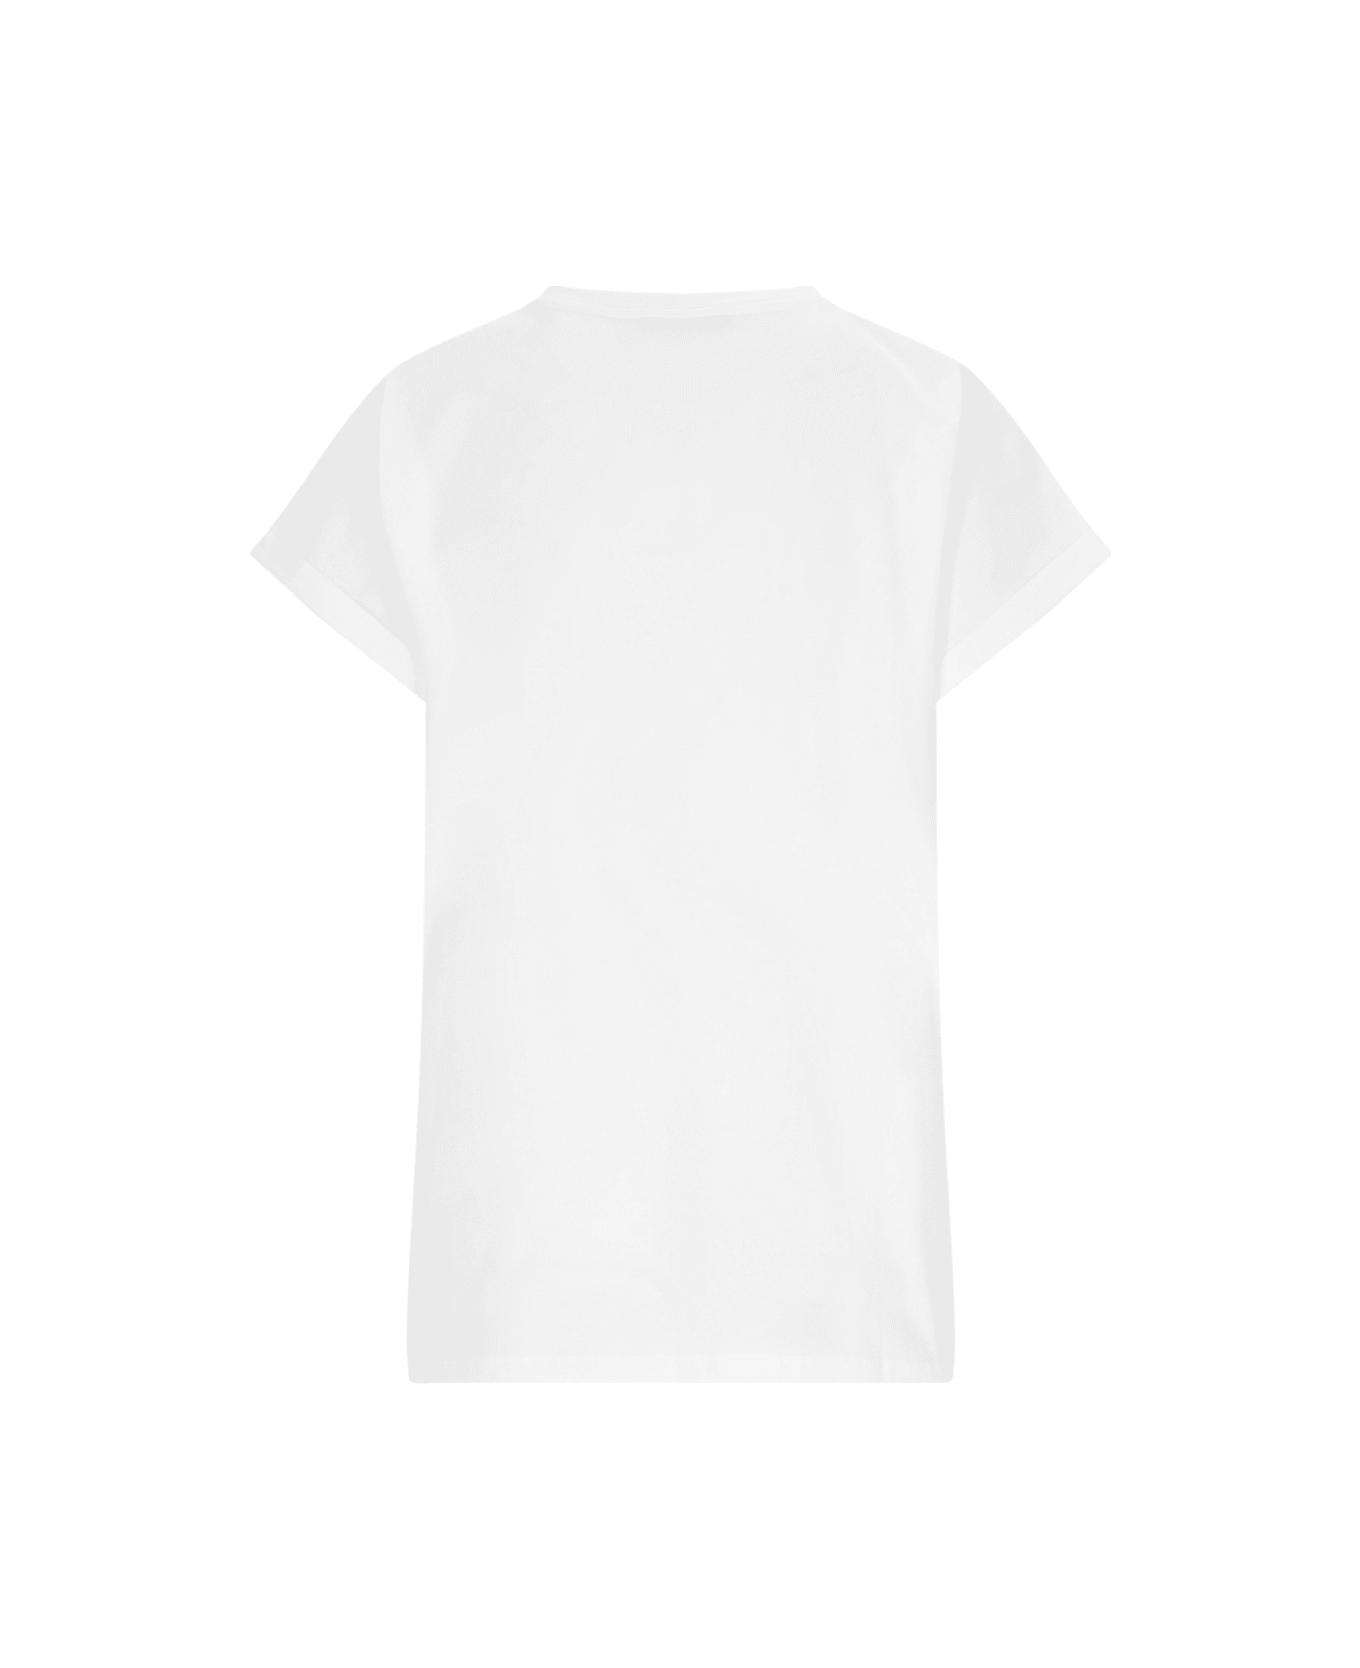 Balmain Flocked T-shirt - White Tシャツ